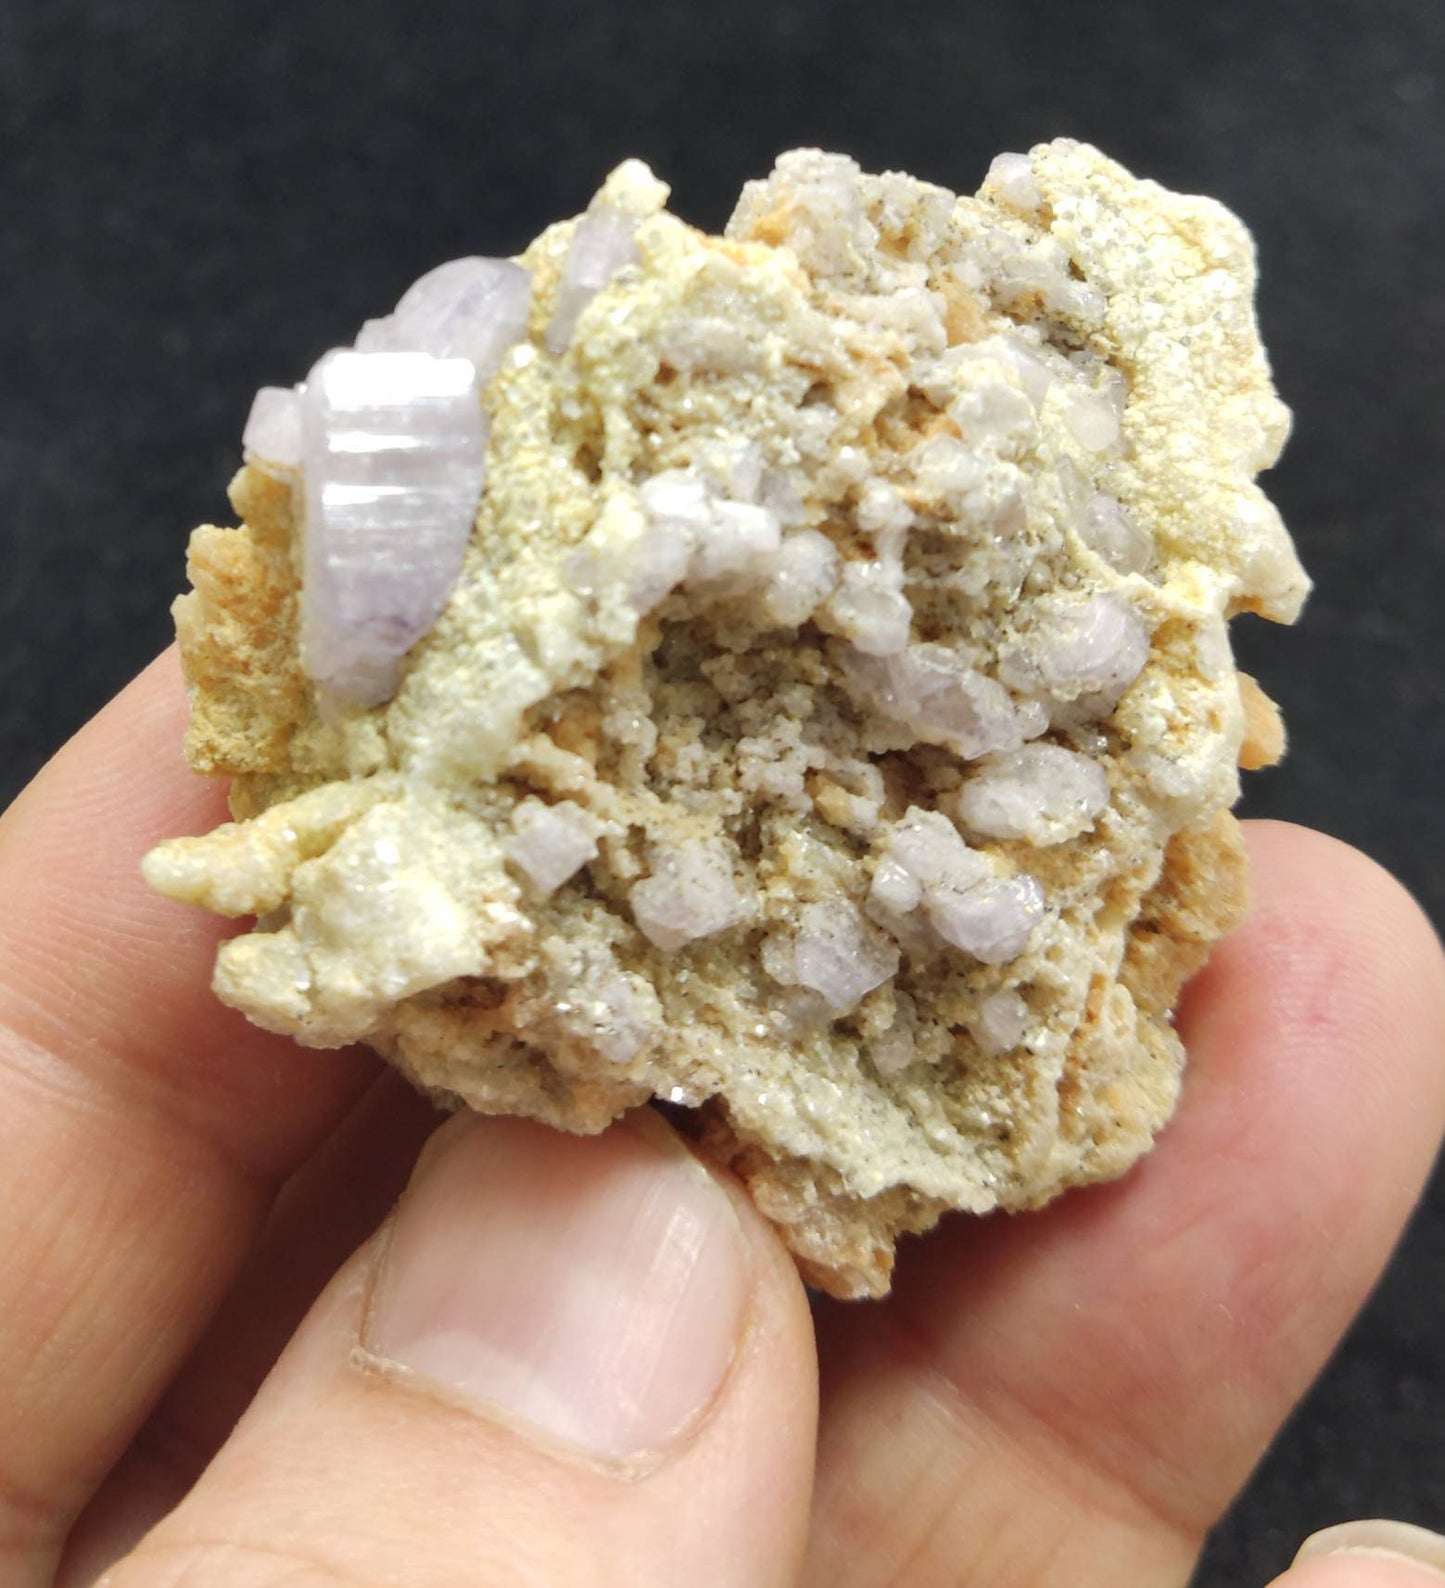 Purple Apatite crystals on matrix 34 grams